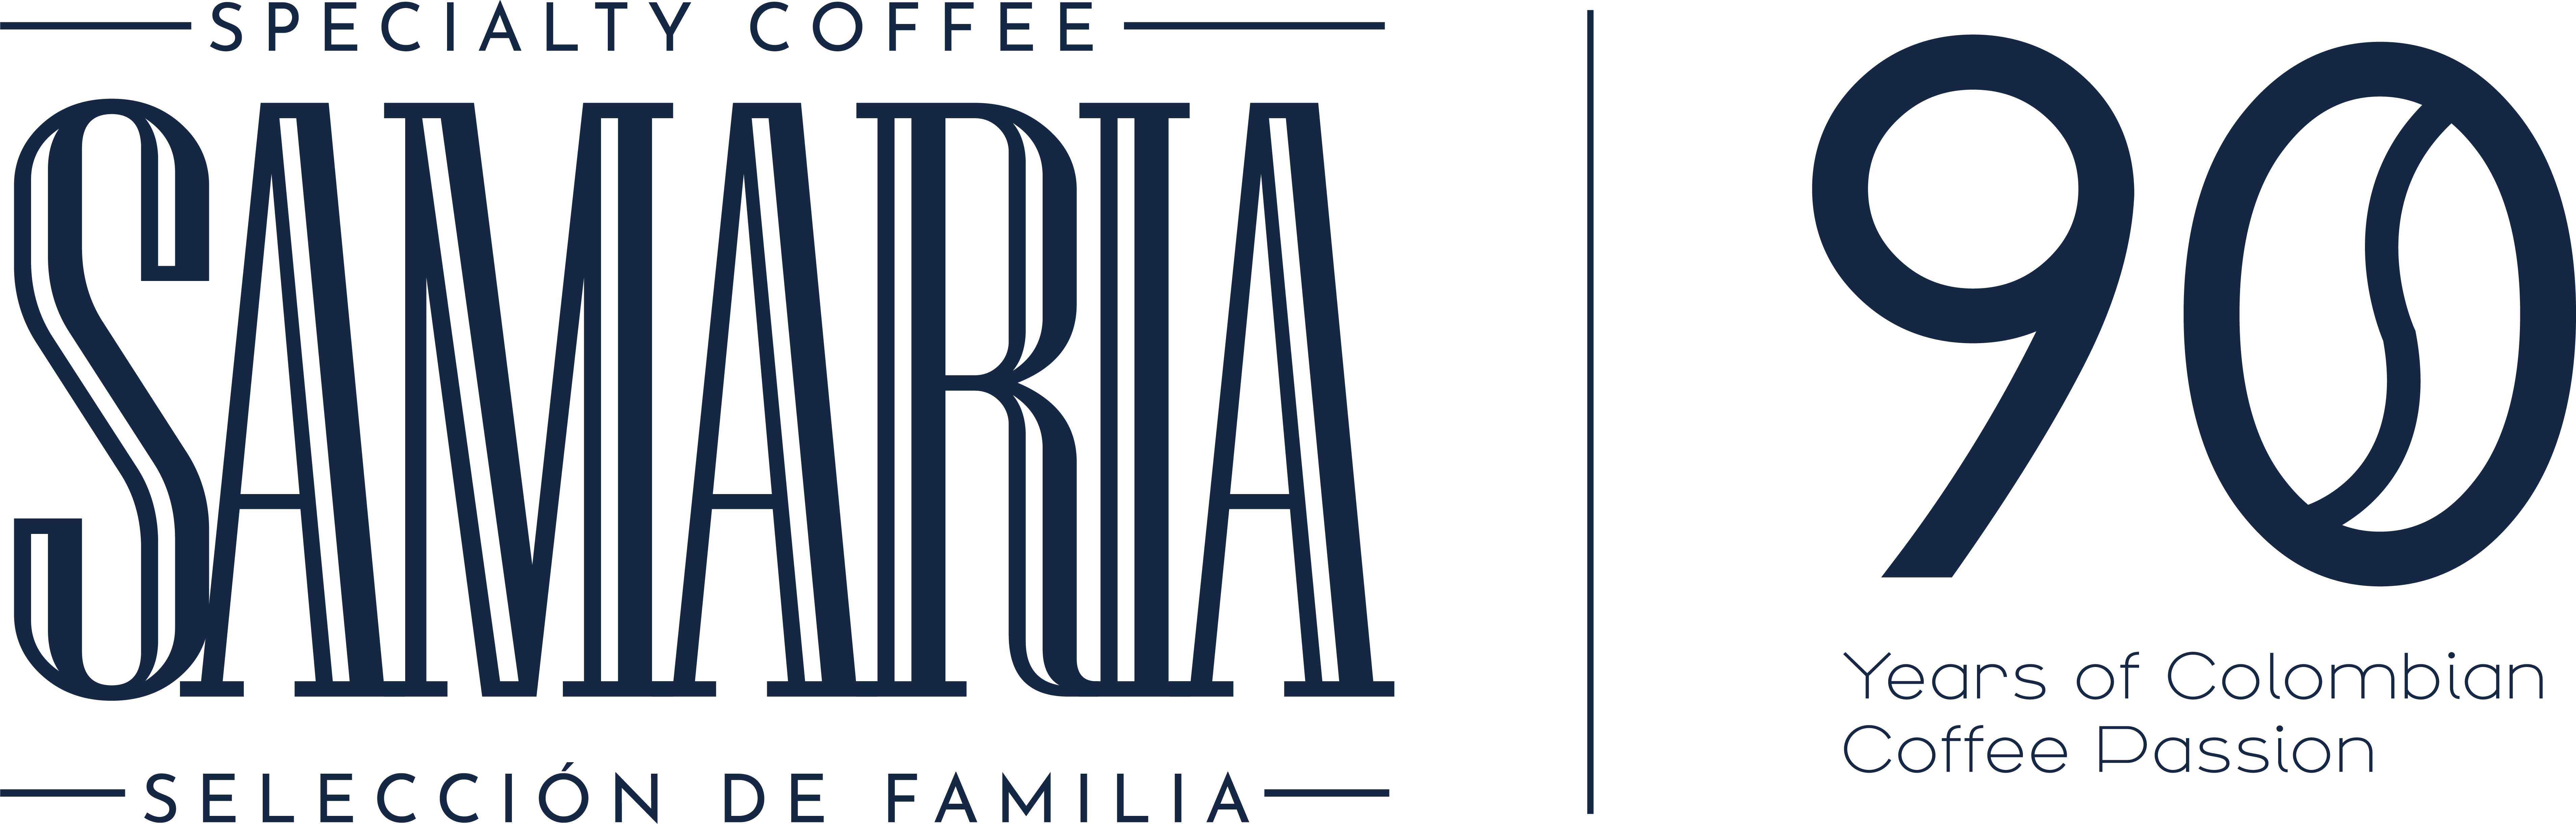 Samaria Coffee